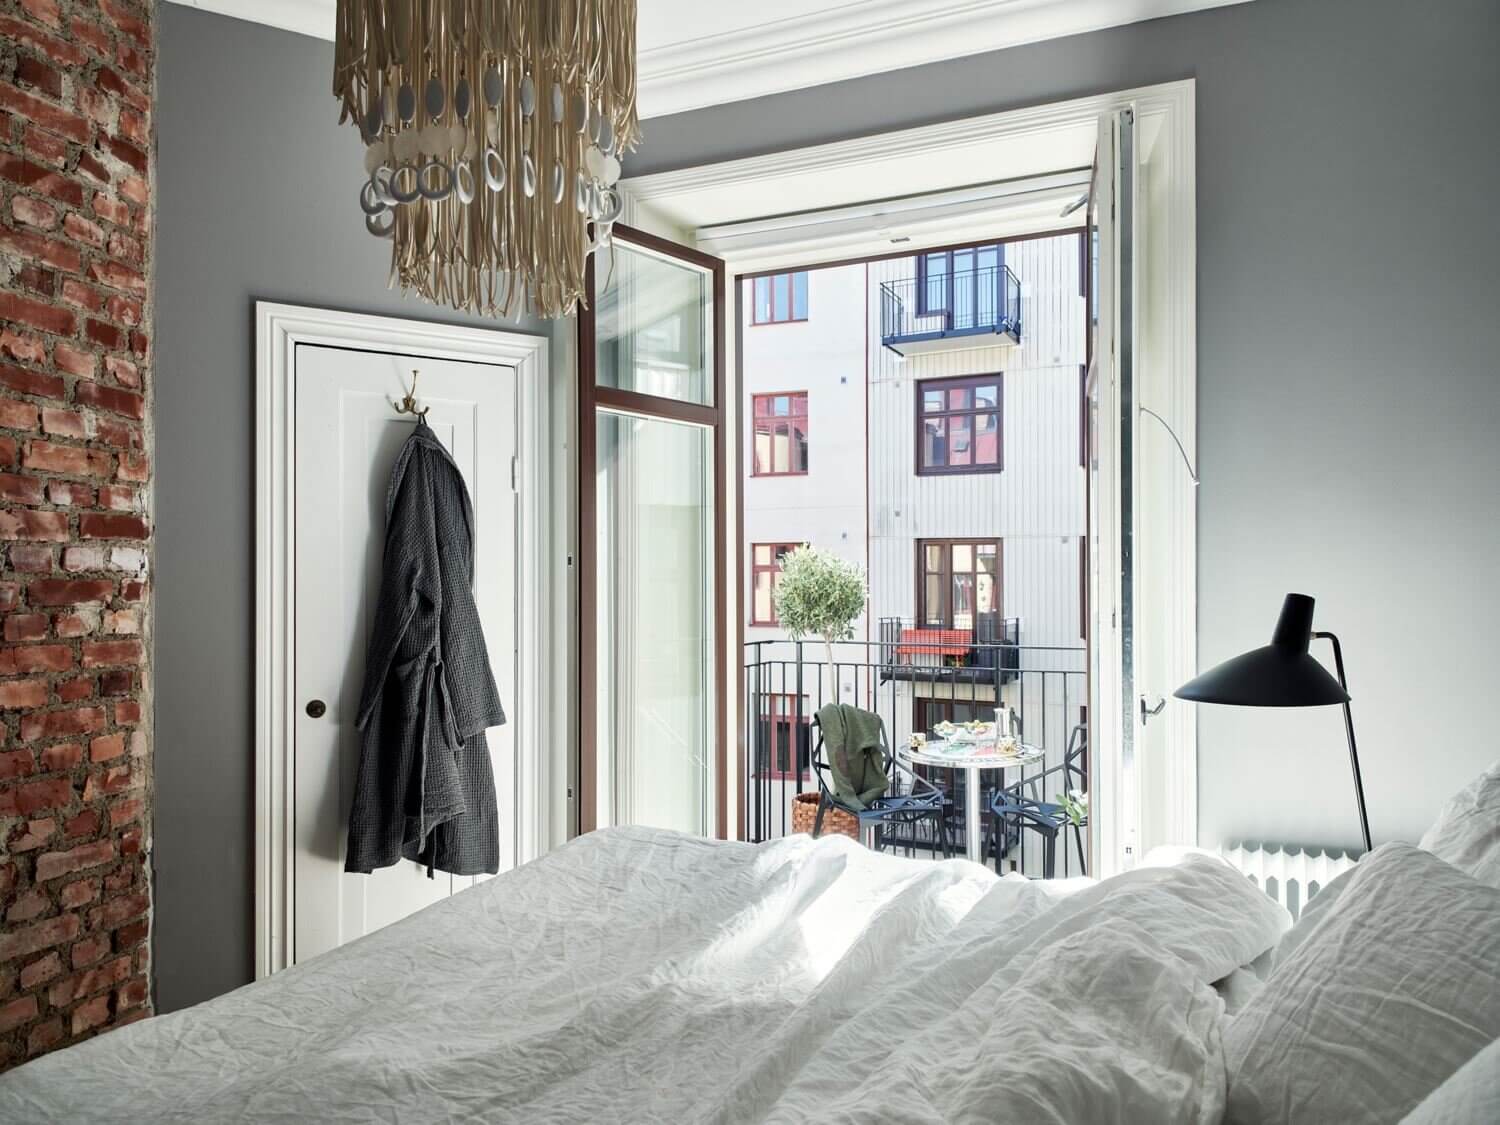 AGreyArt FilledScandinavianApartment TheNordroom12 A Grey Art-Filled Scandinavian Apartment